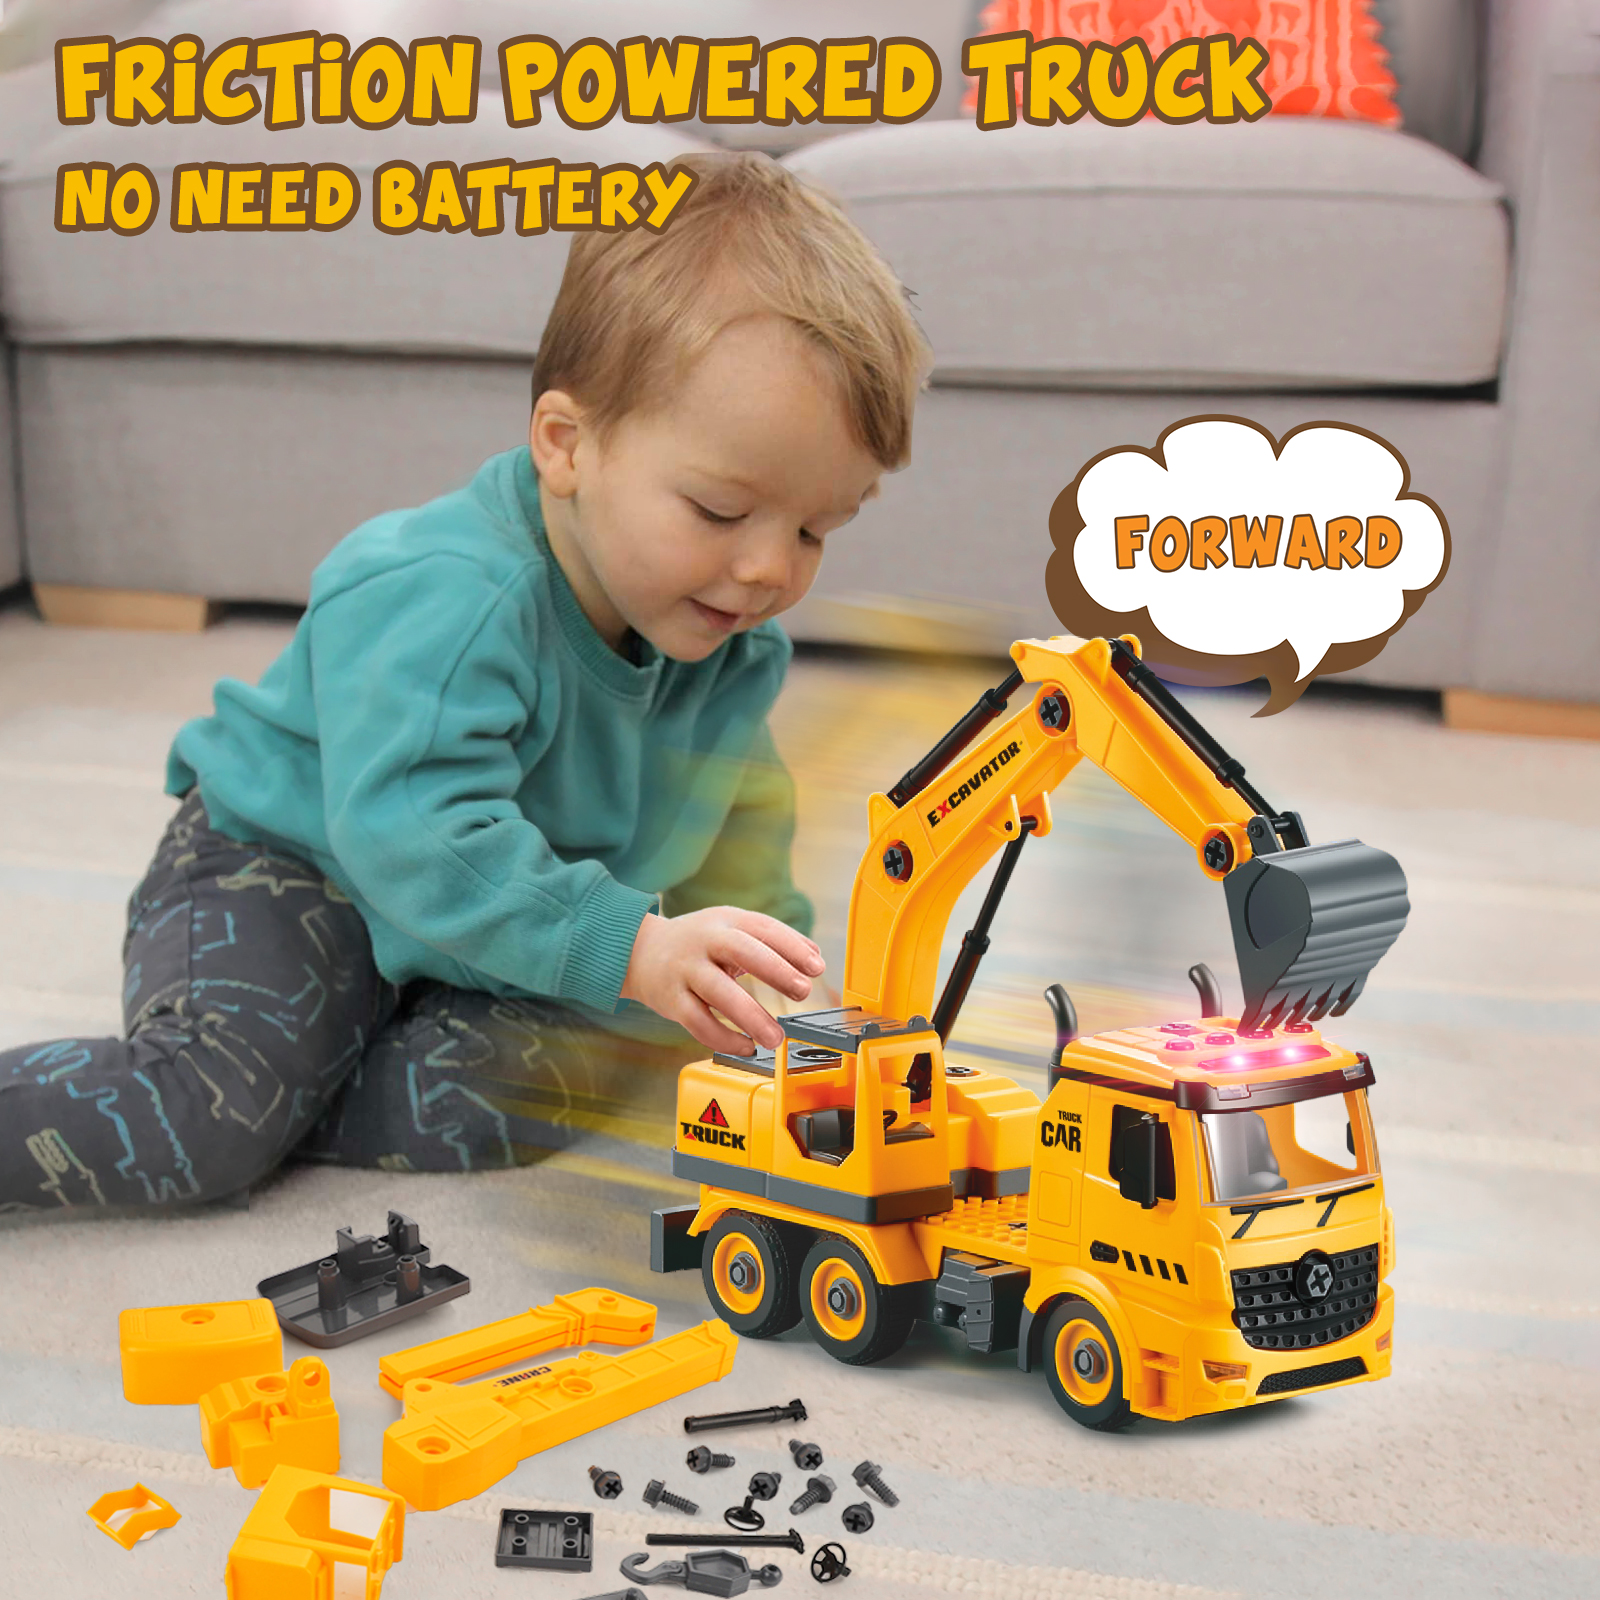 Diecast Metal Construction Trucks, Heavy Metal Excavator and Dump Truck, Free Wheeler Die Cast Construction Toys - image 4 of 7